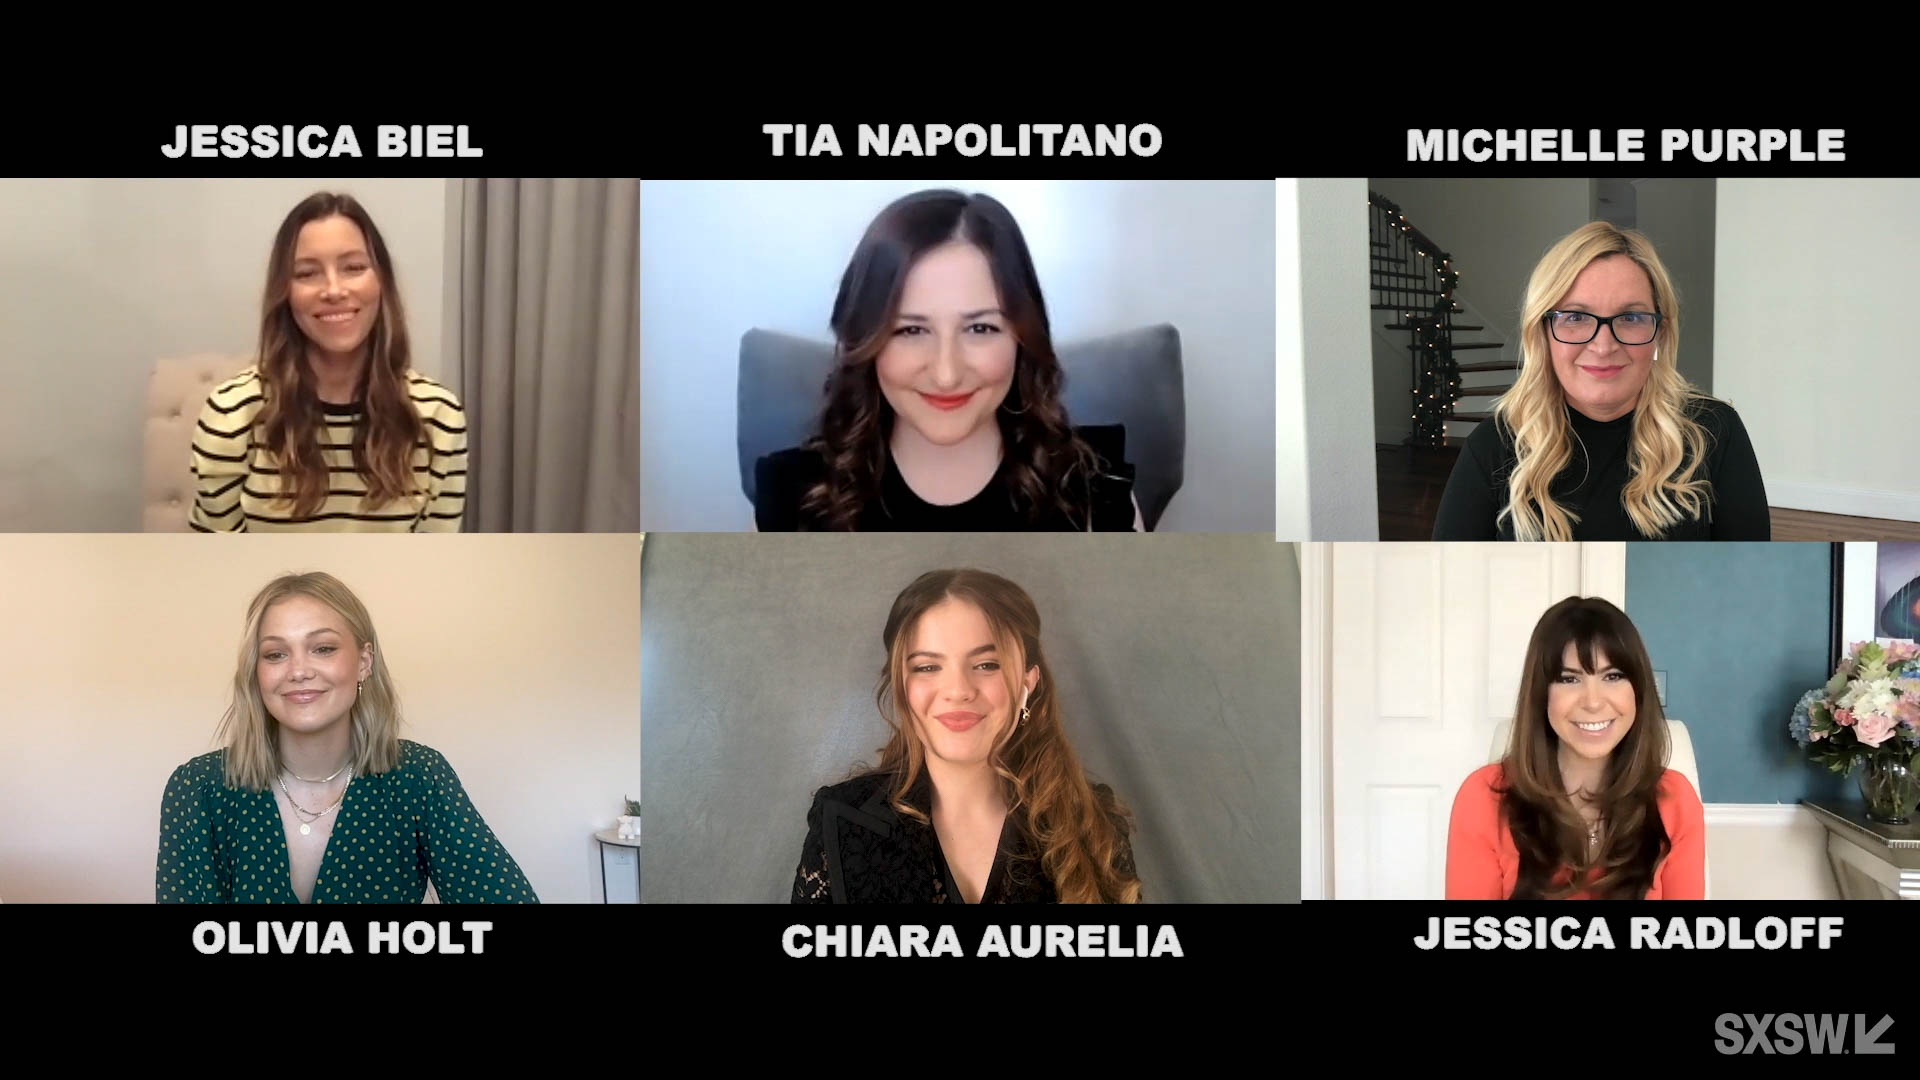 Jessica Radloff moderates the “Cruel Summer” Q&A with Jessica Biel, Tia Napolitano, Michelle Purple, Olivia Holt, and Chiara Aurelia at SXSW Online on March 19, 2021.